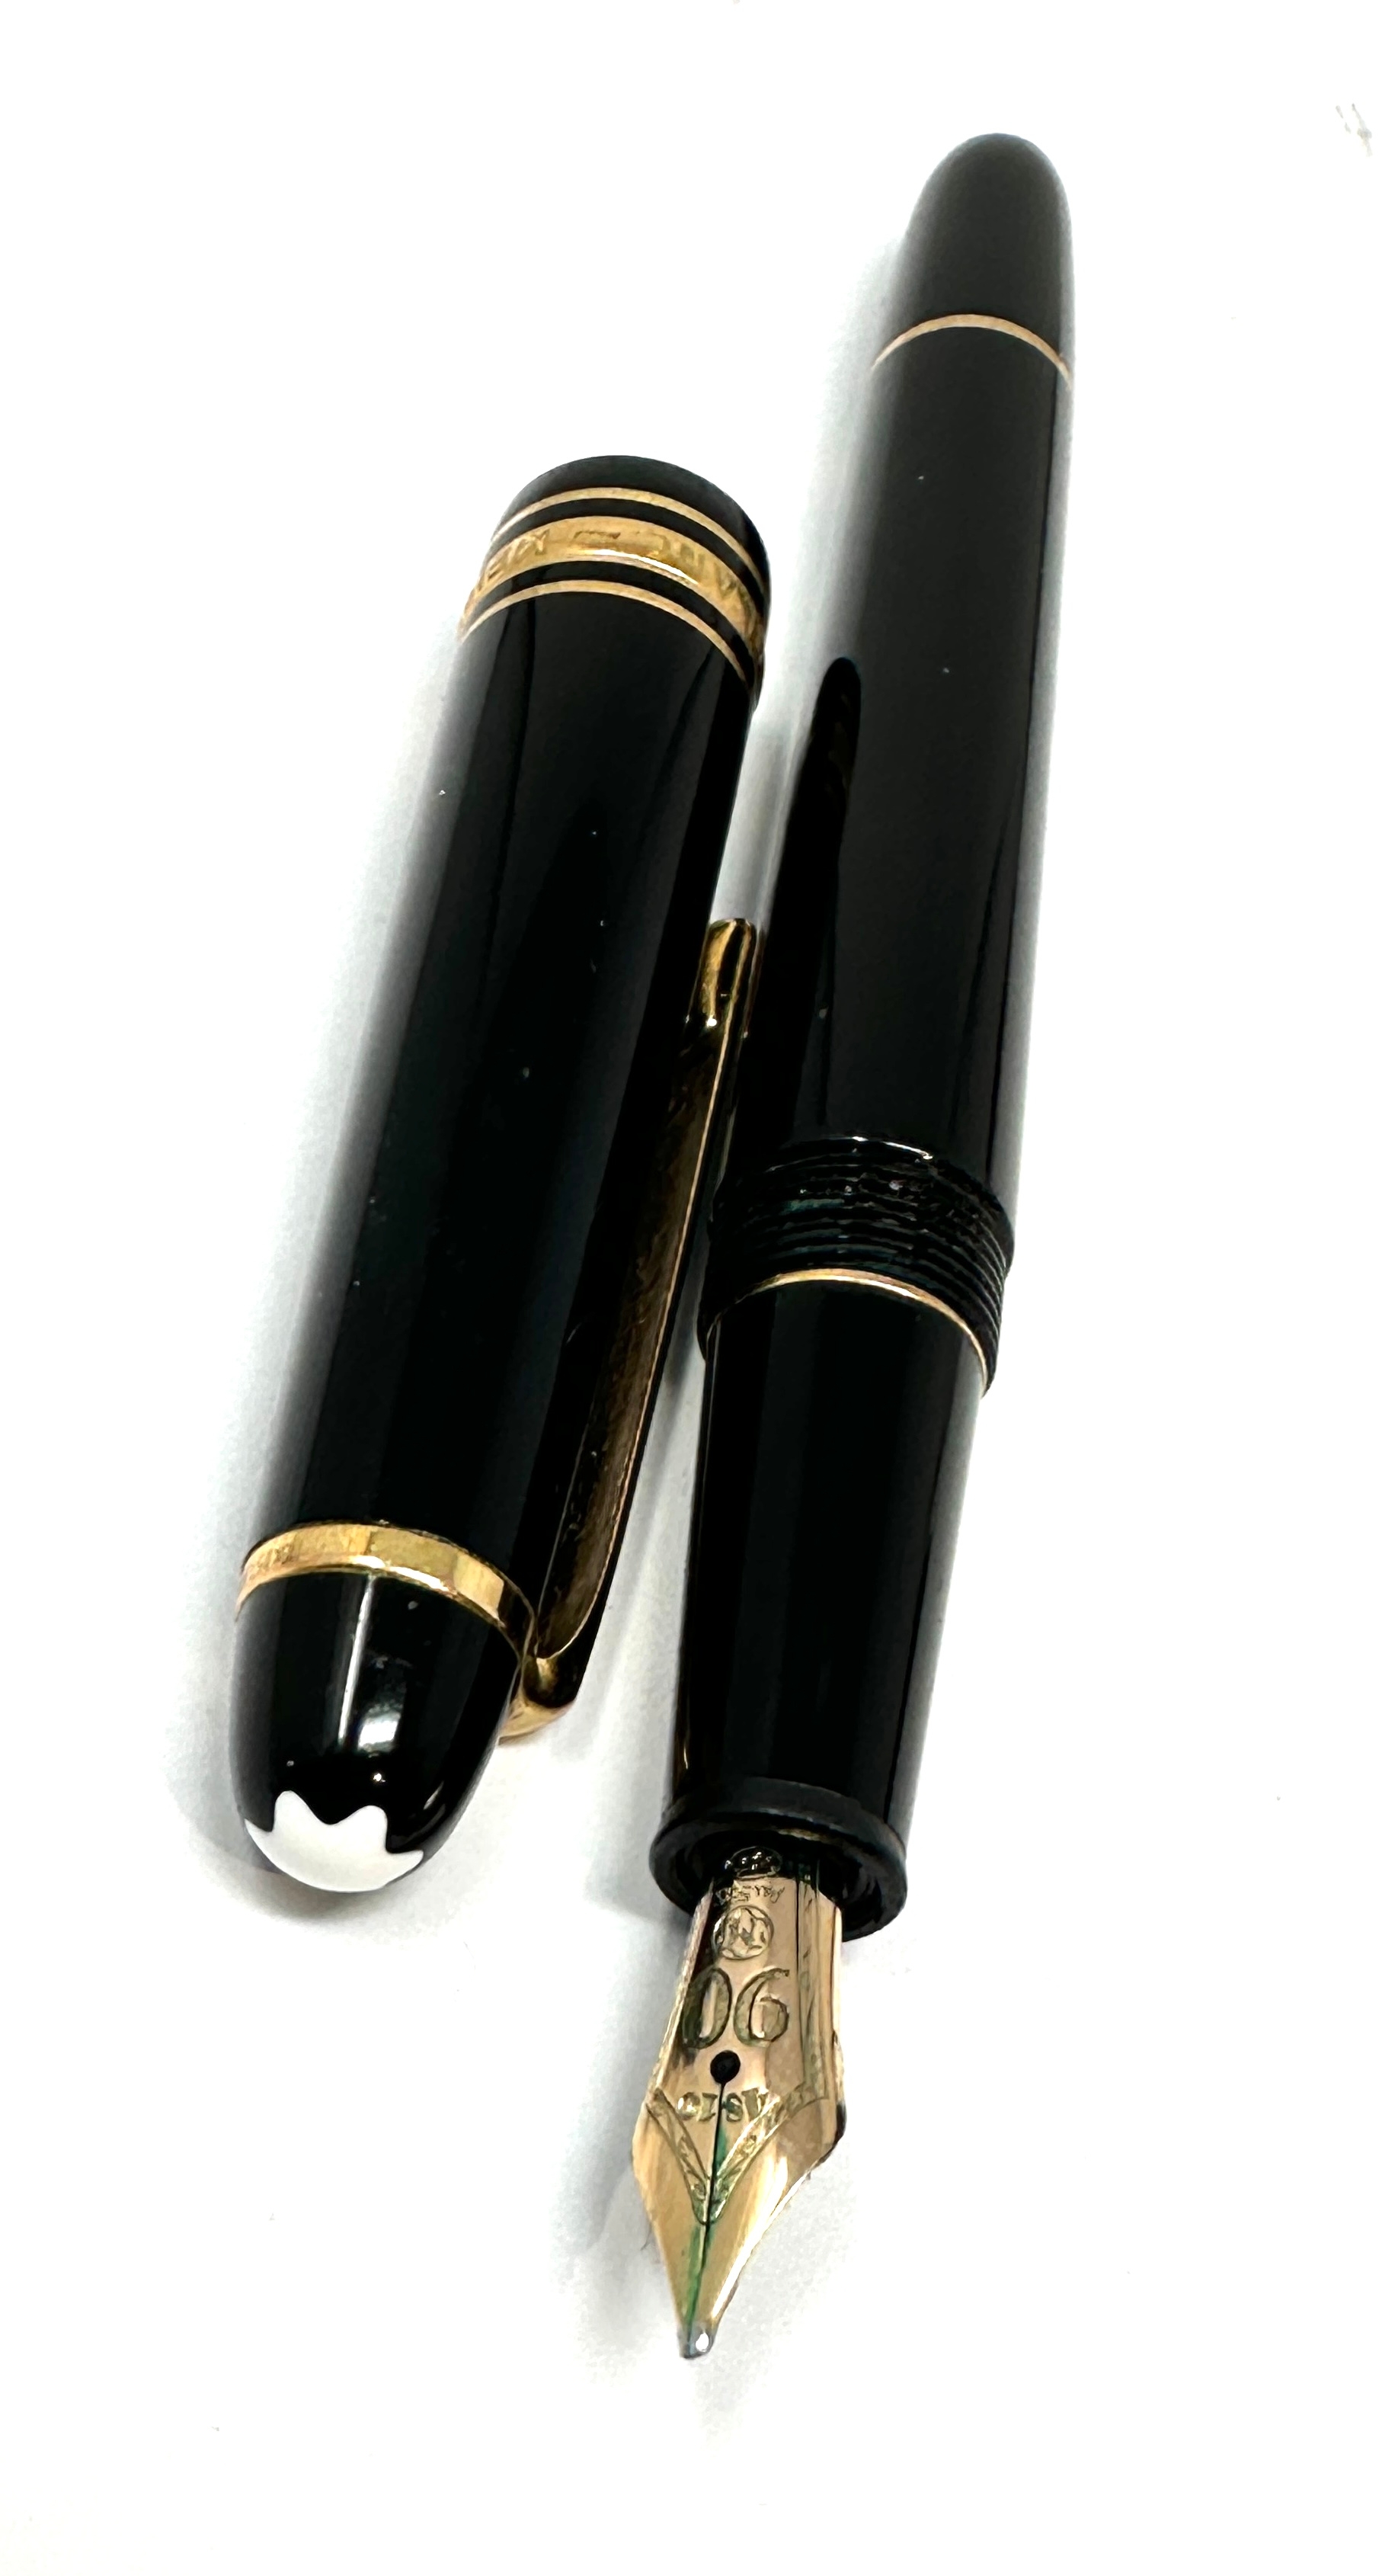 Montblanc 4810 14ct gold nib fountain pen - Image 2 of 4